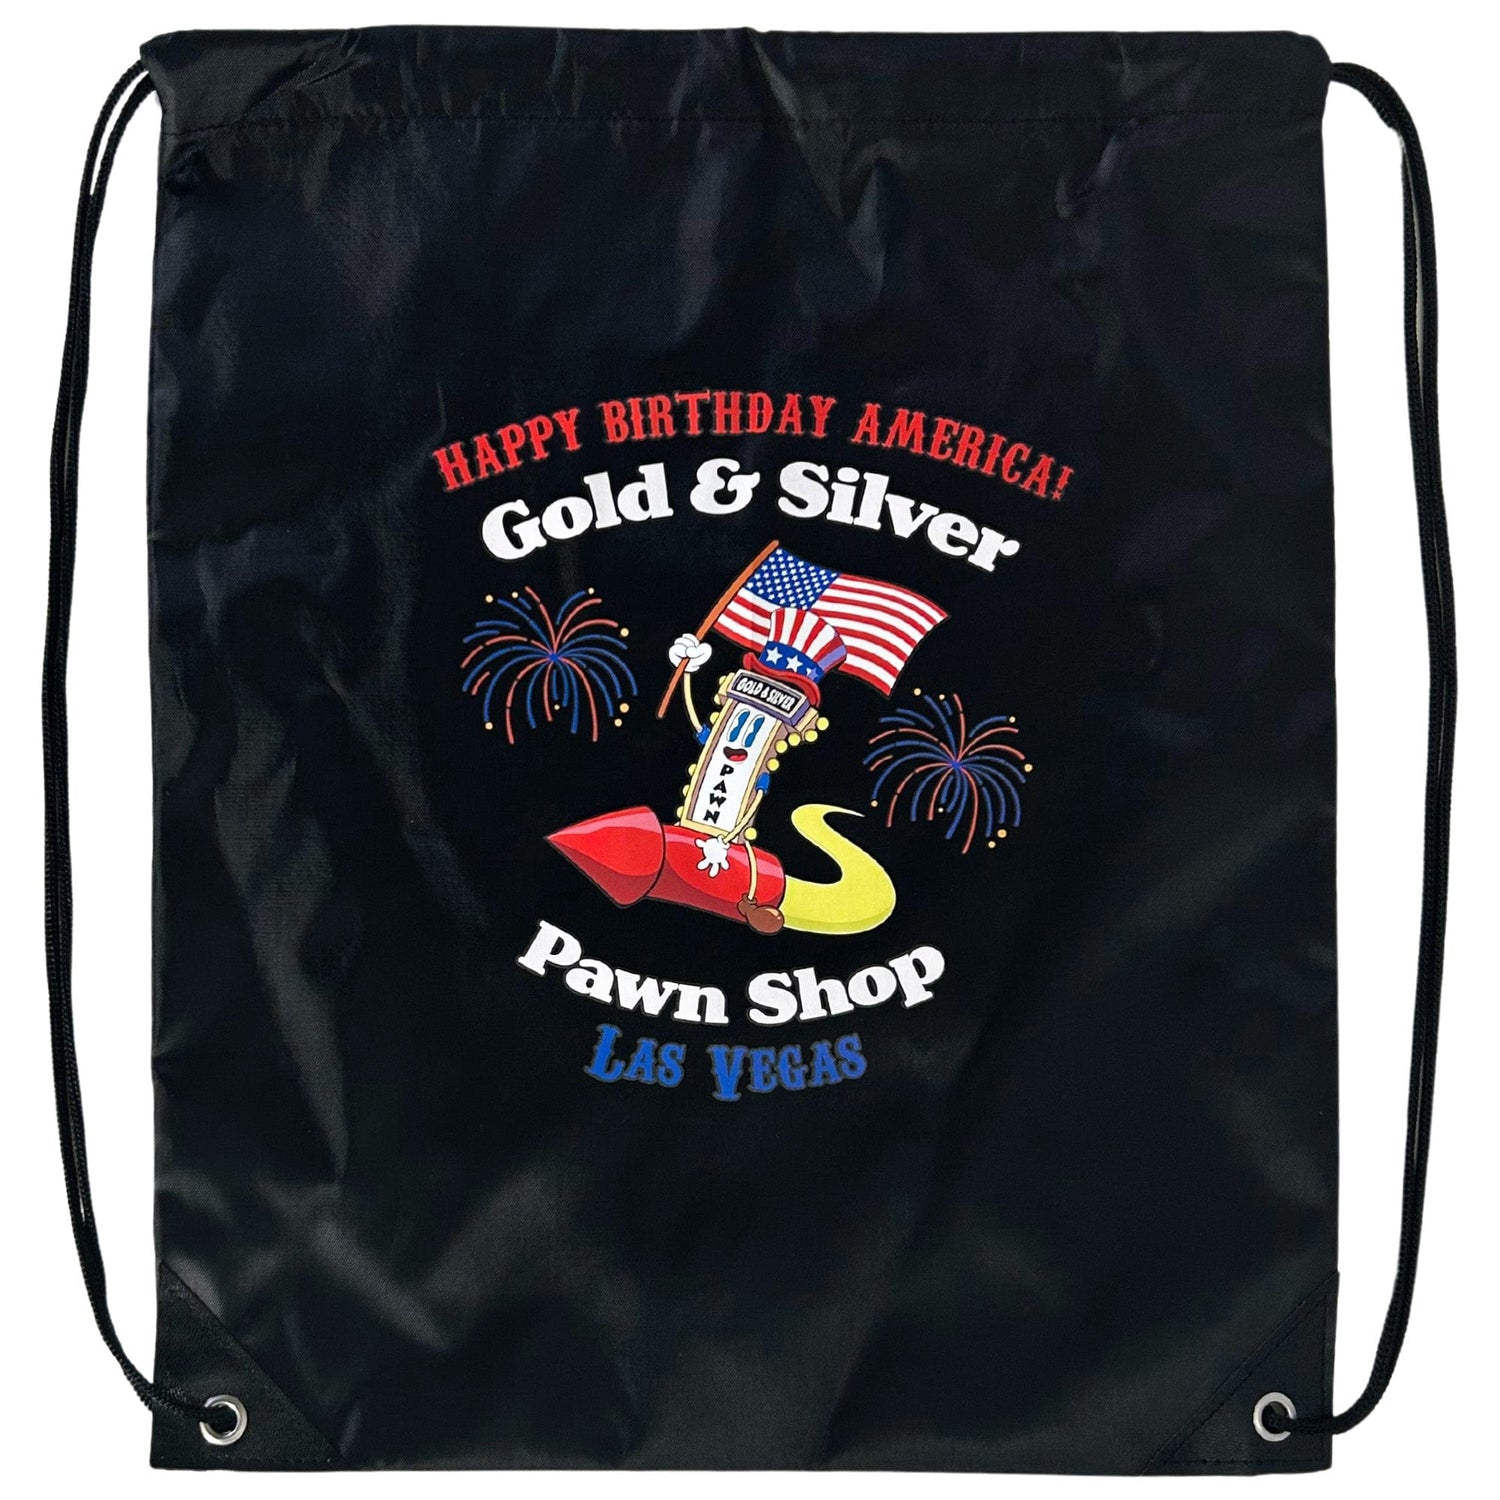 Gold & Silver Pawn Shop 4th of July Drawstring Bag ZOOM